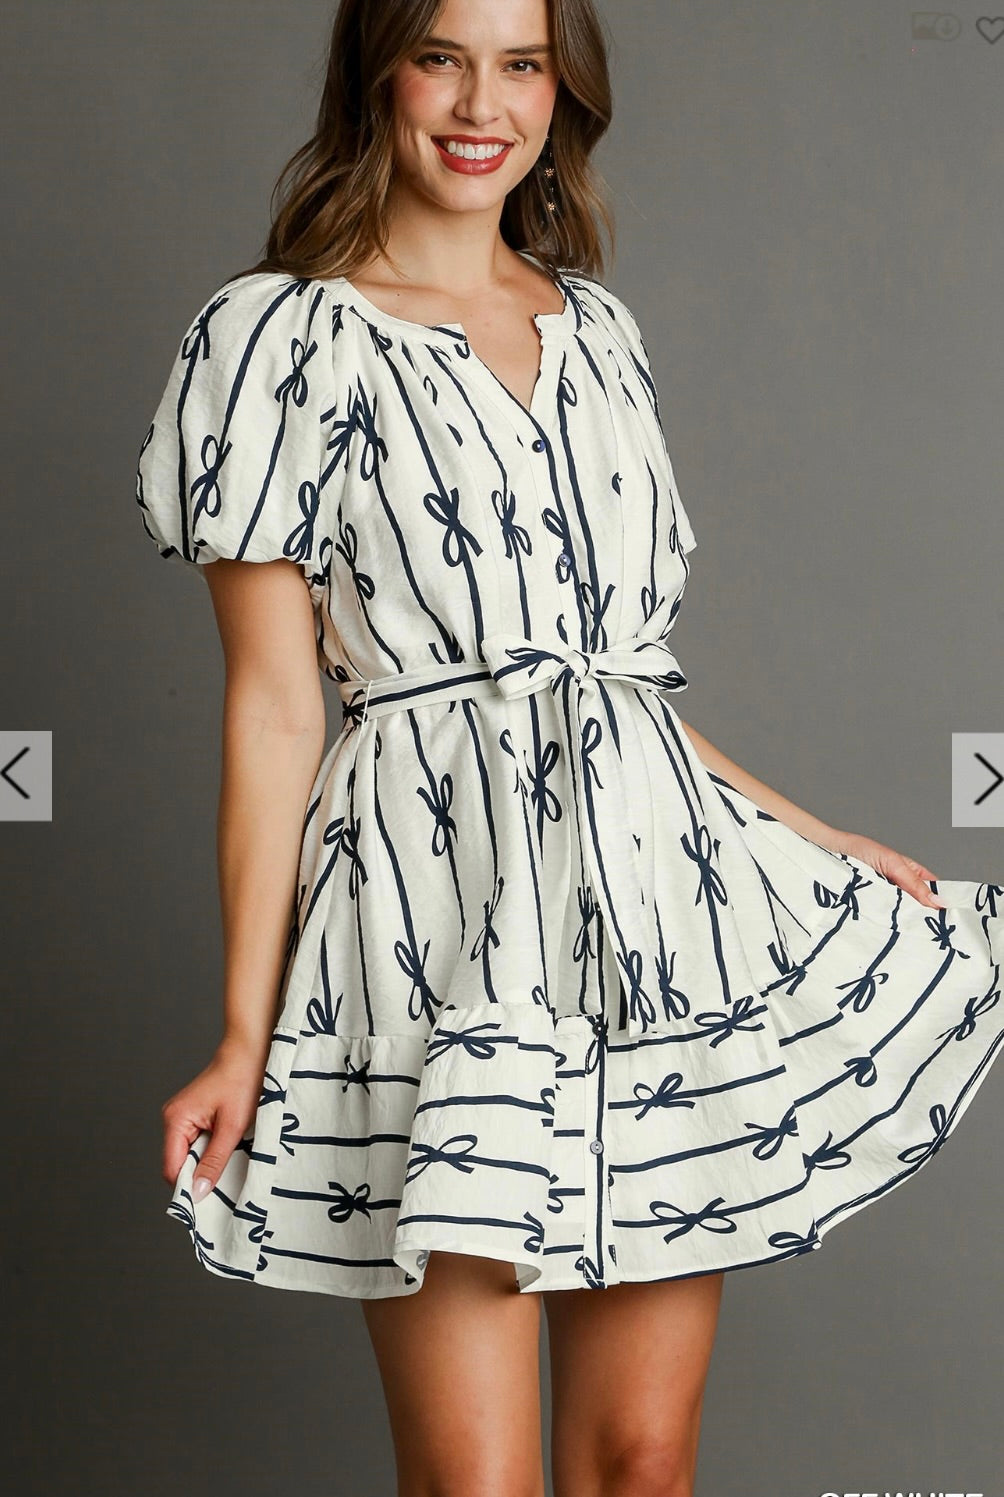 Adorable Two Tone Bow Print Dress